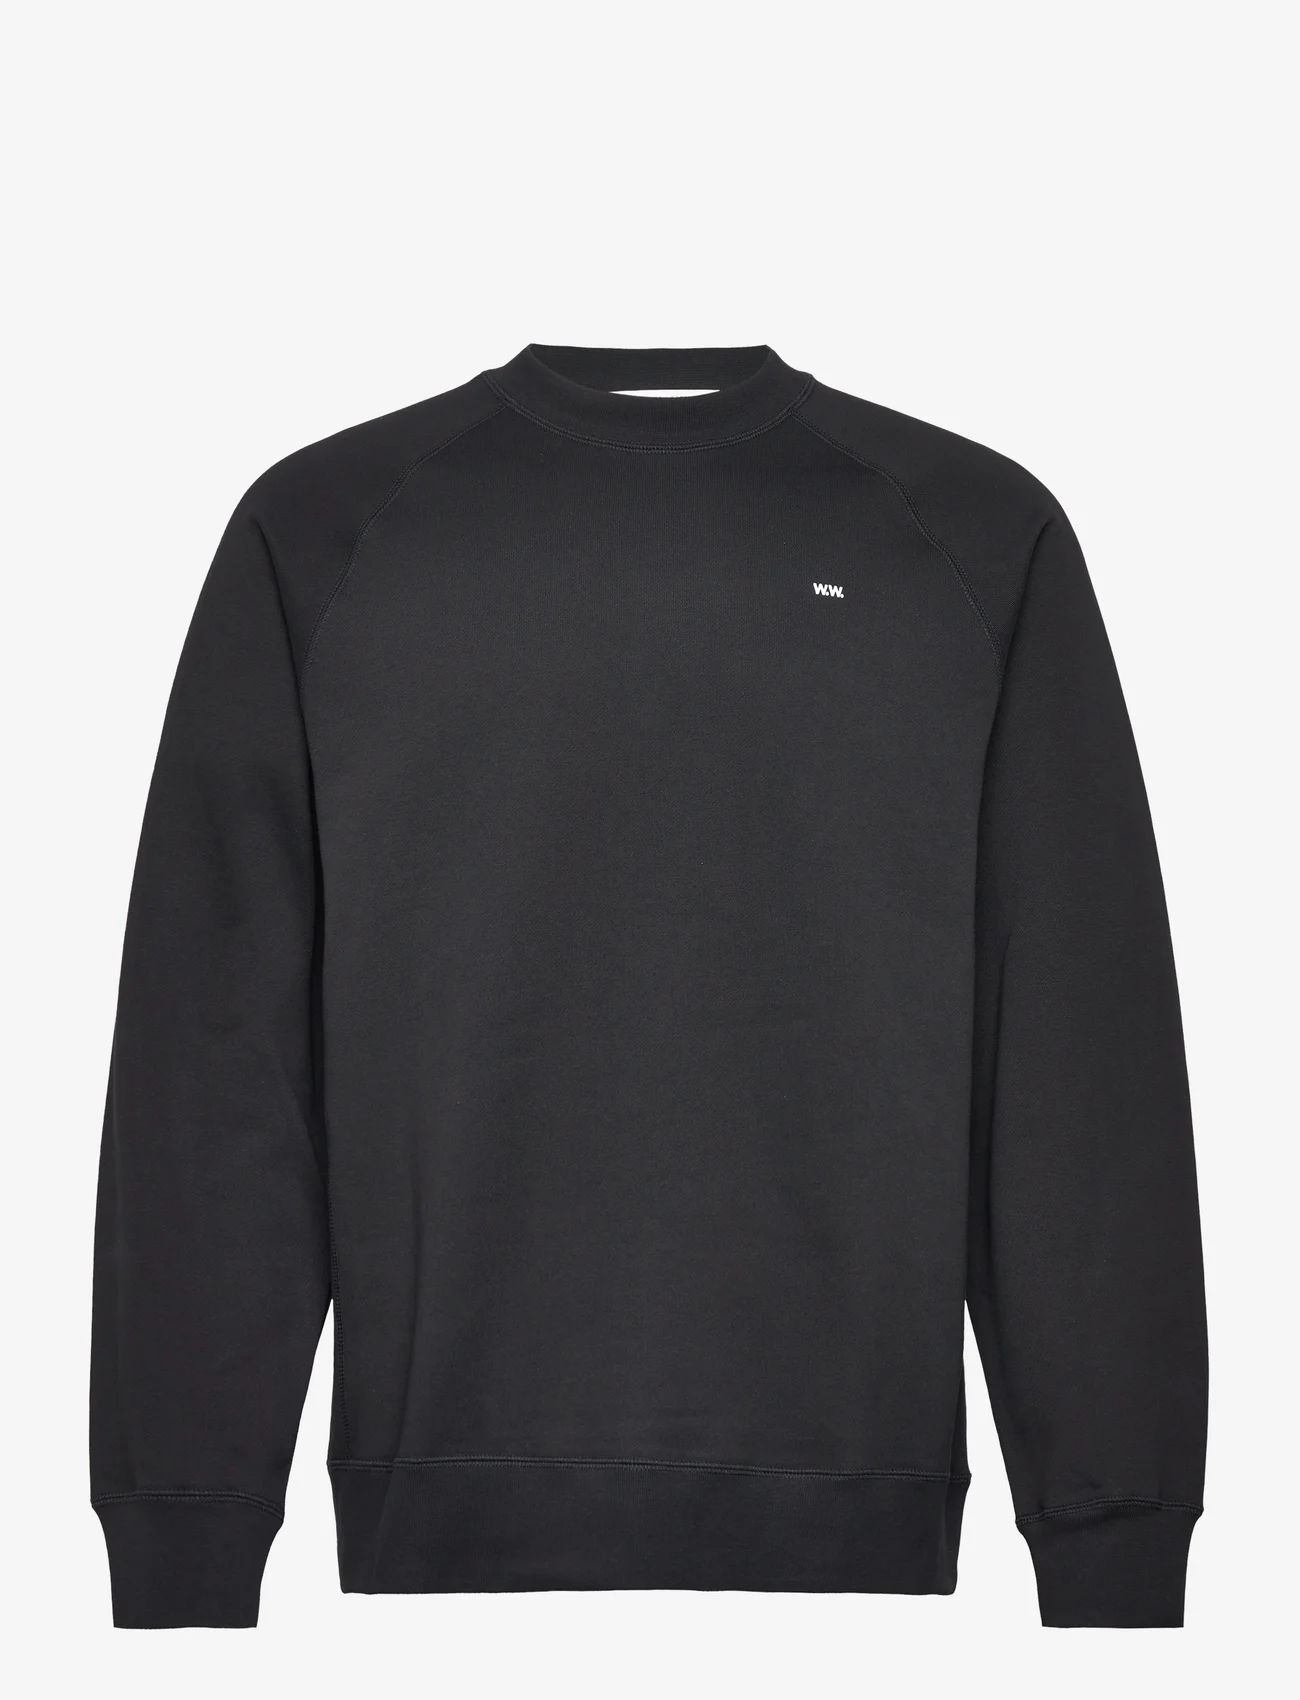 Wood Wood - Hester classic sweatshirt - kapuzenpullover - black - 0